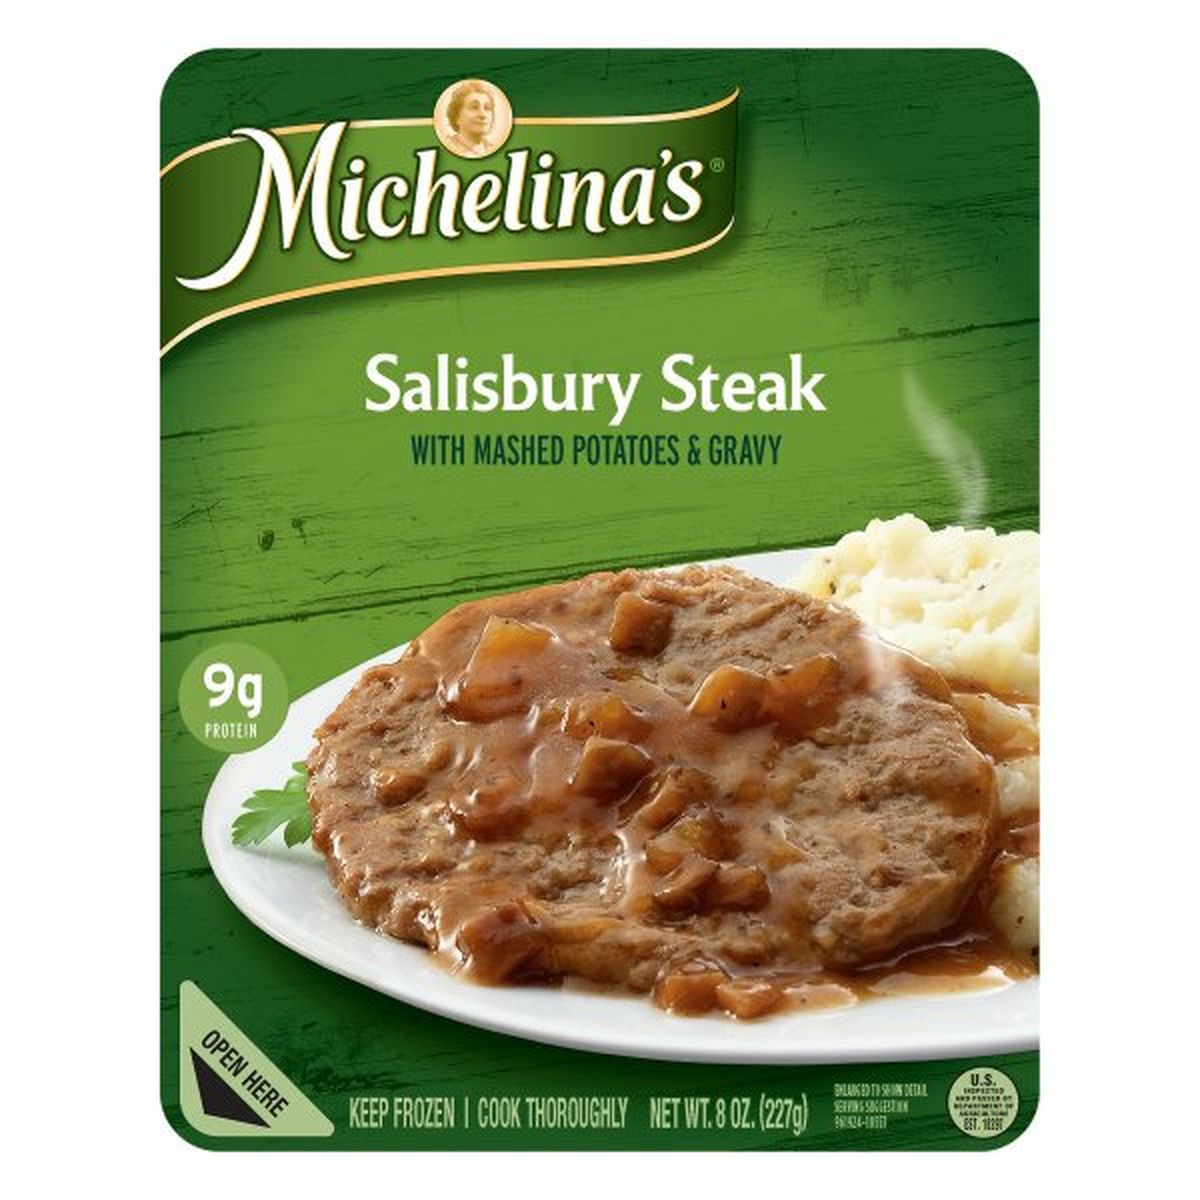 Calories in Michelina's Salisbury Steak with Mashed Potatoes & Gravy